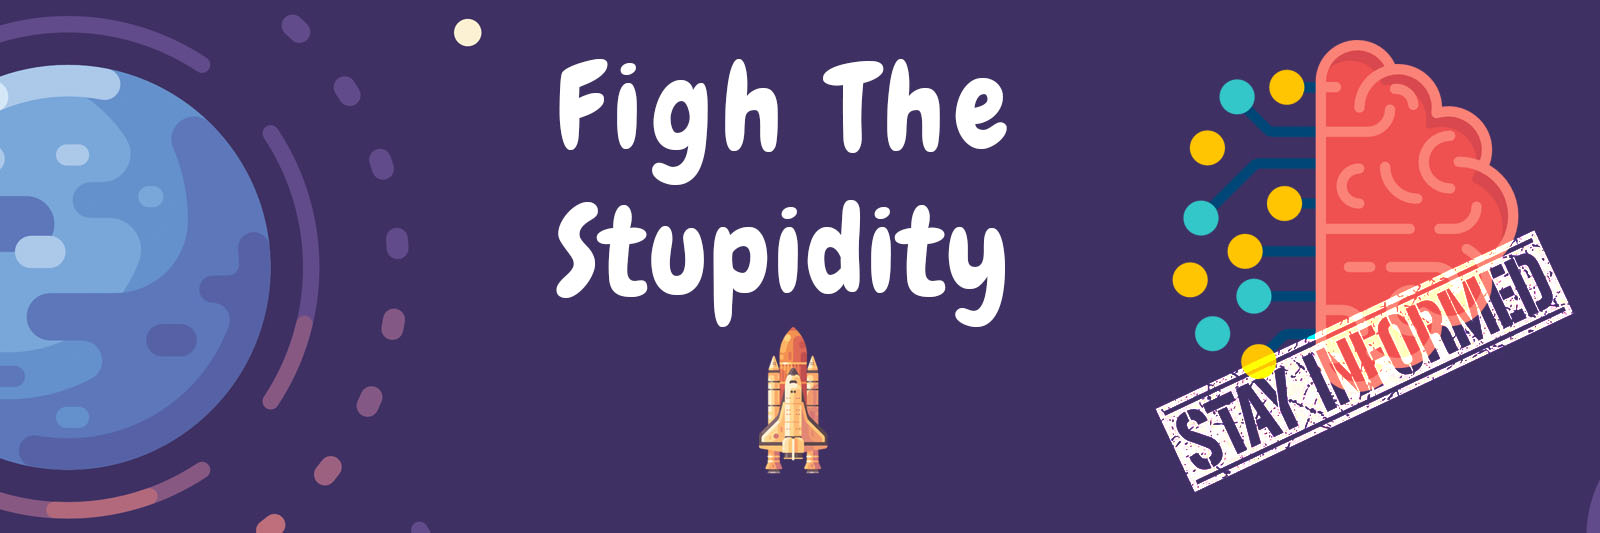 against stupidity